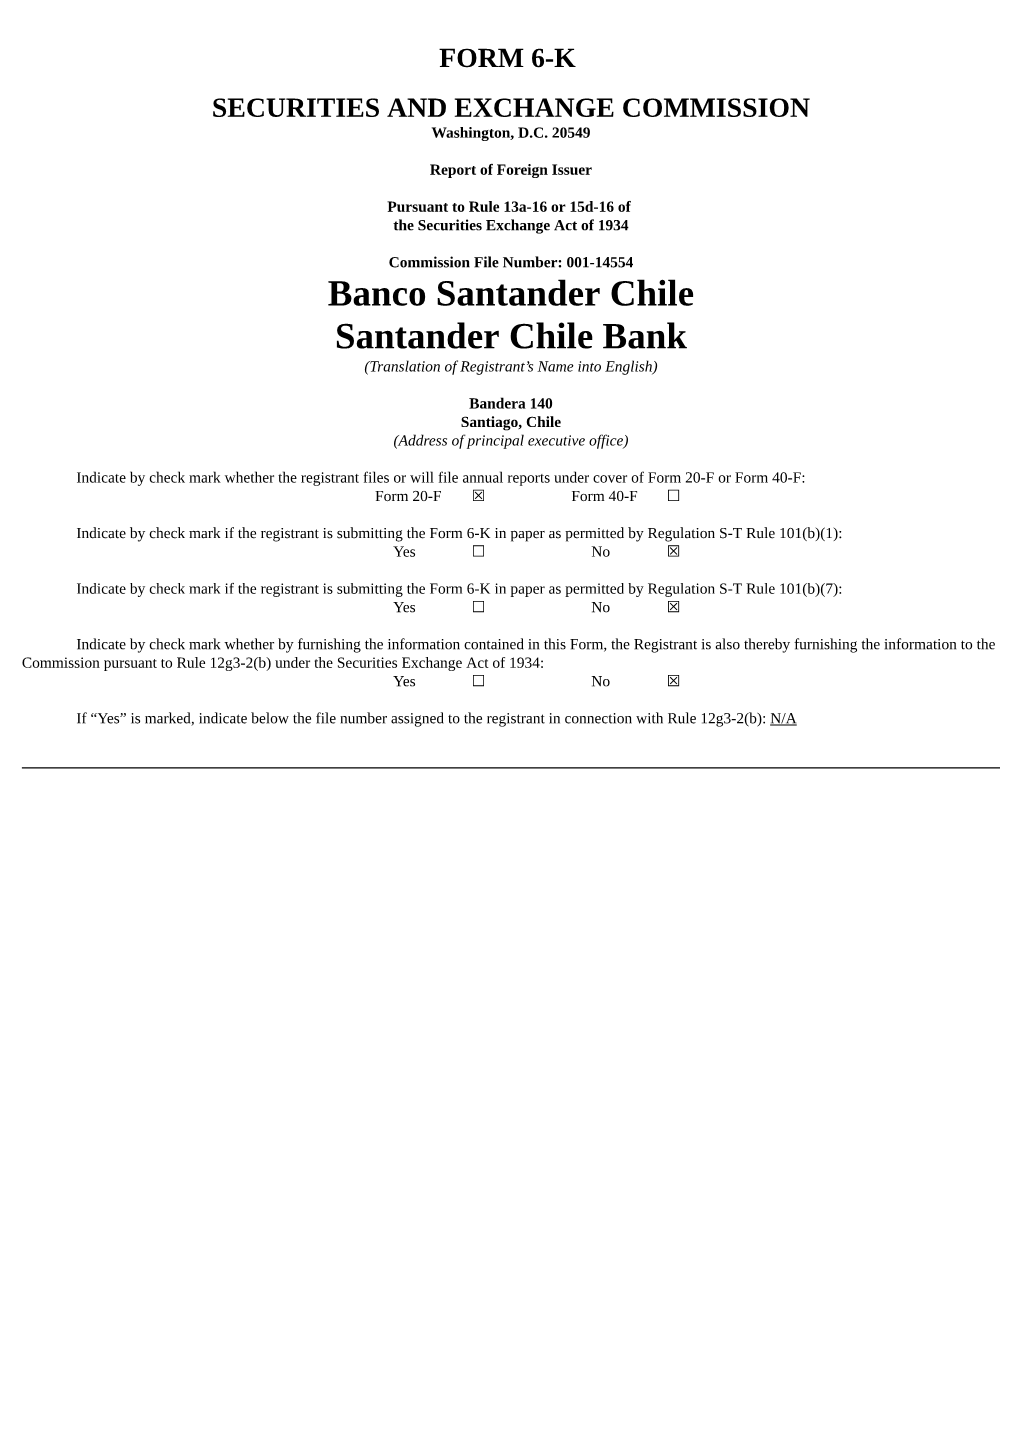 Banco Santander Chile Santander Chile Bank (Translation of Registrant’S Name Into English)